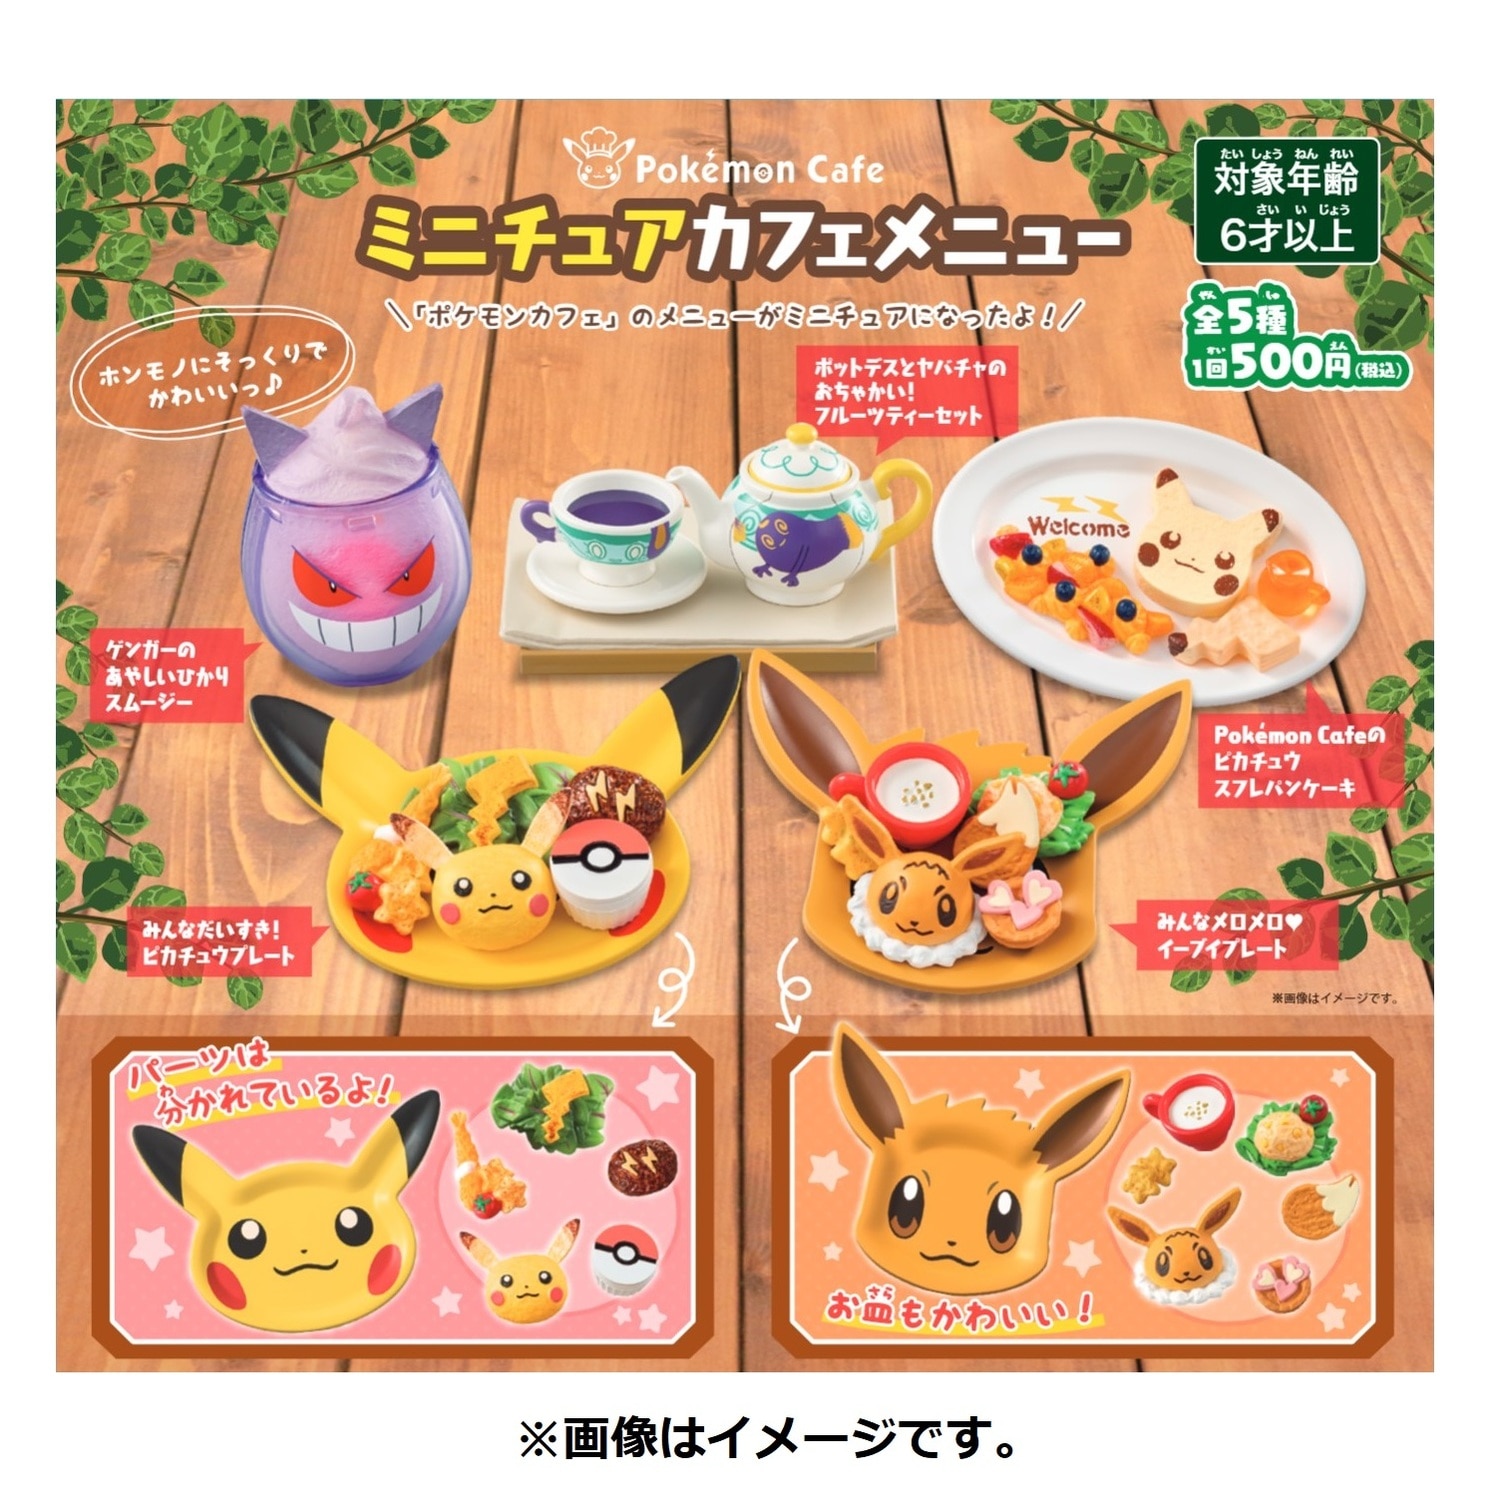 Pokémon Cafe Miniature Menu